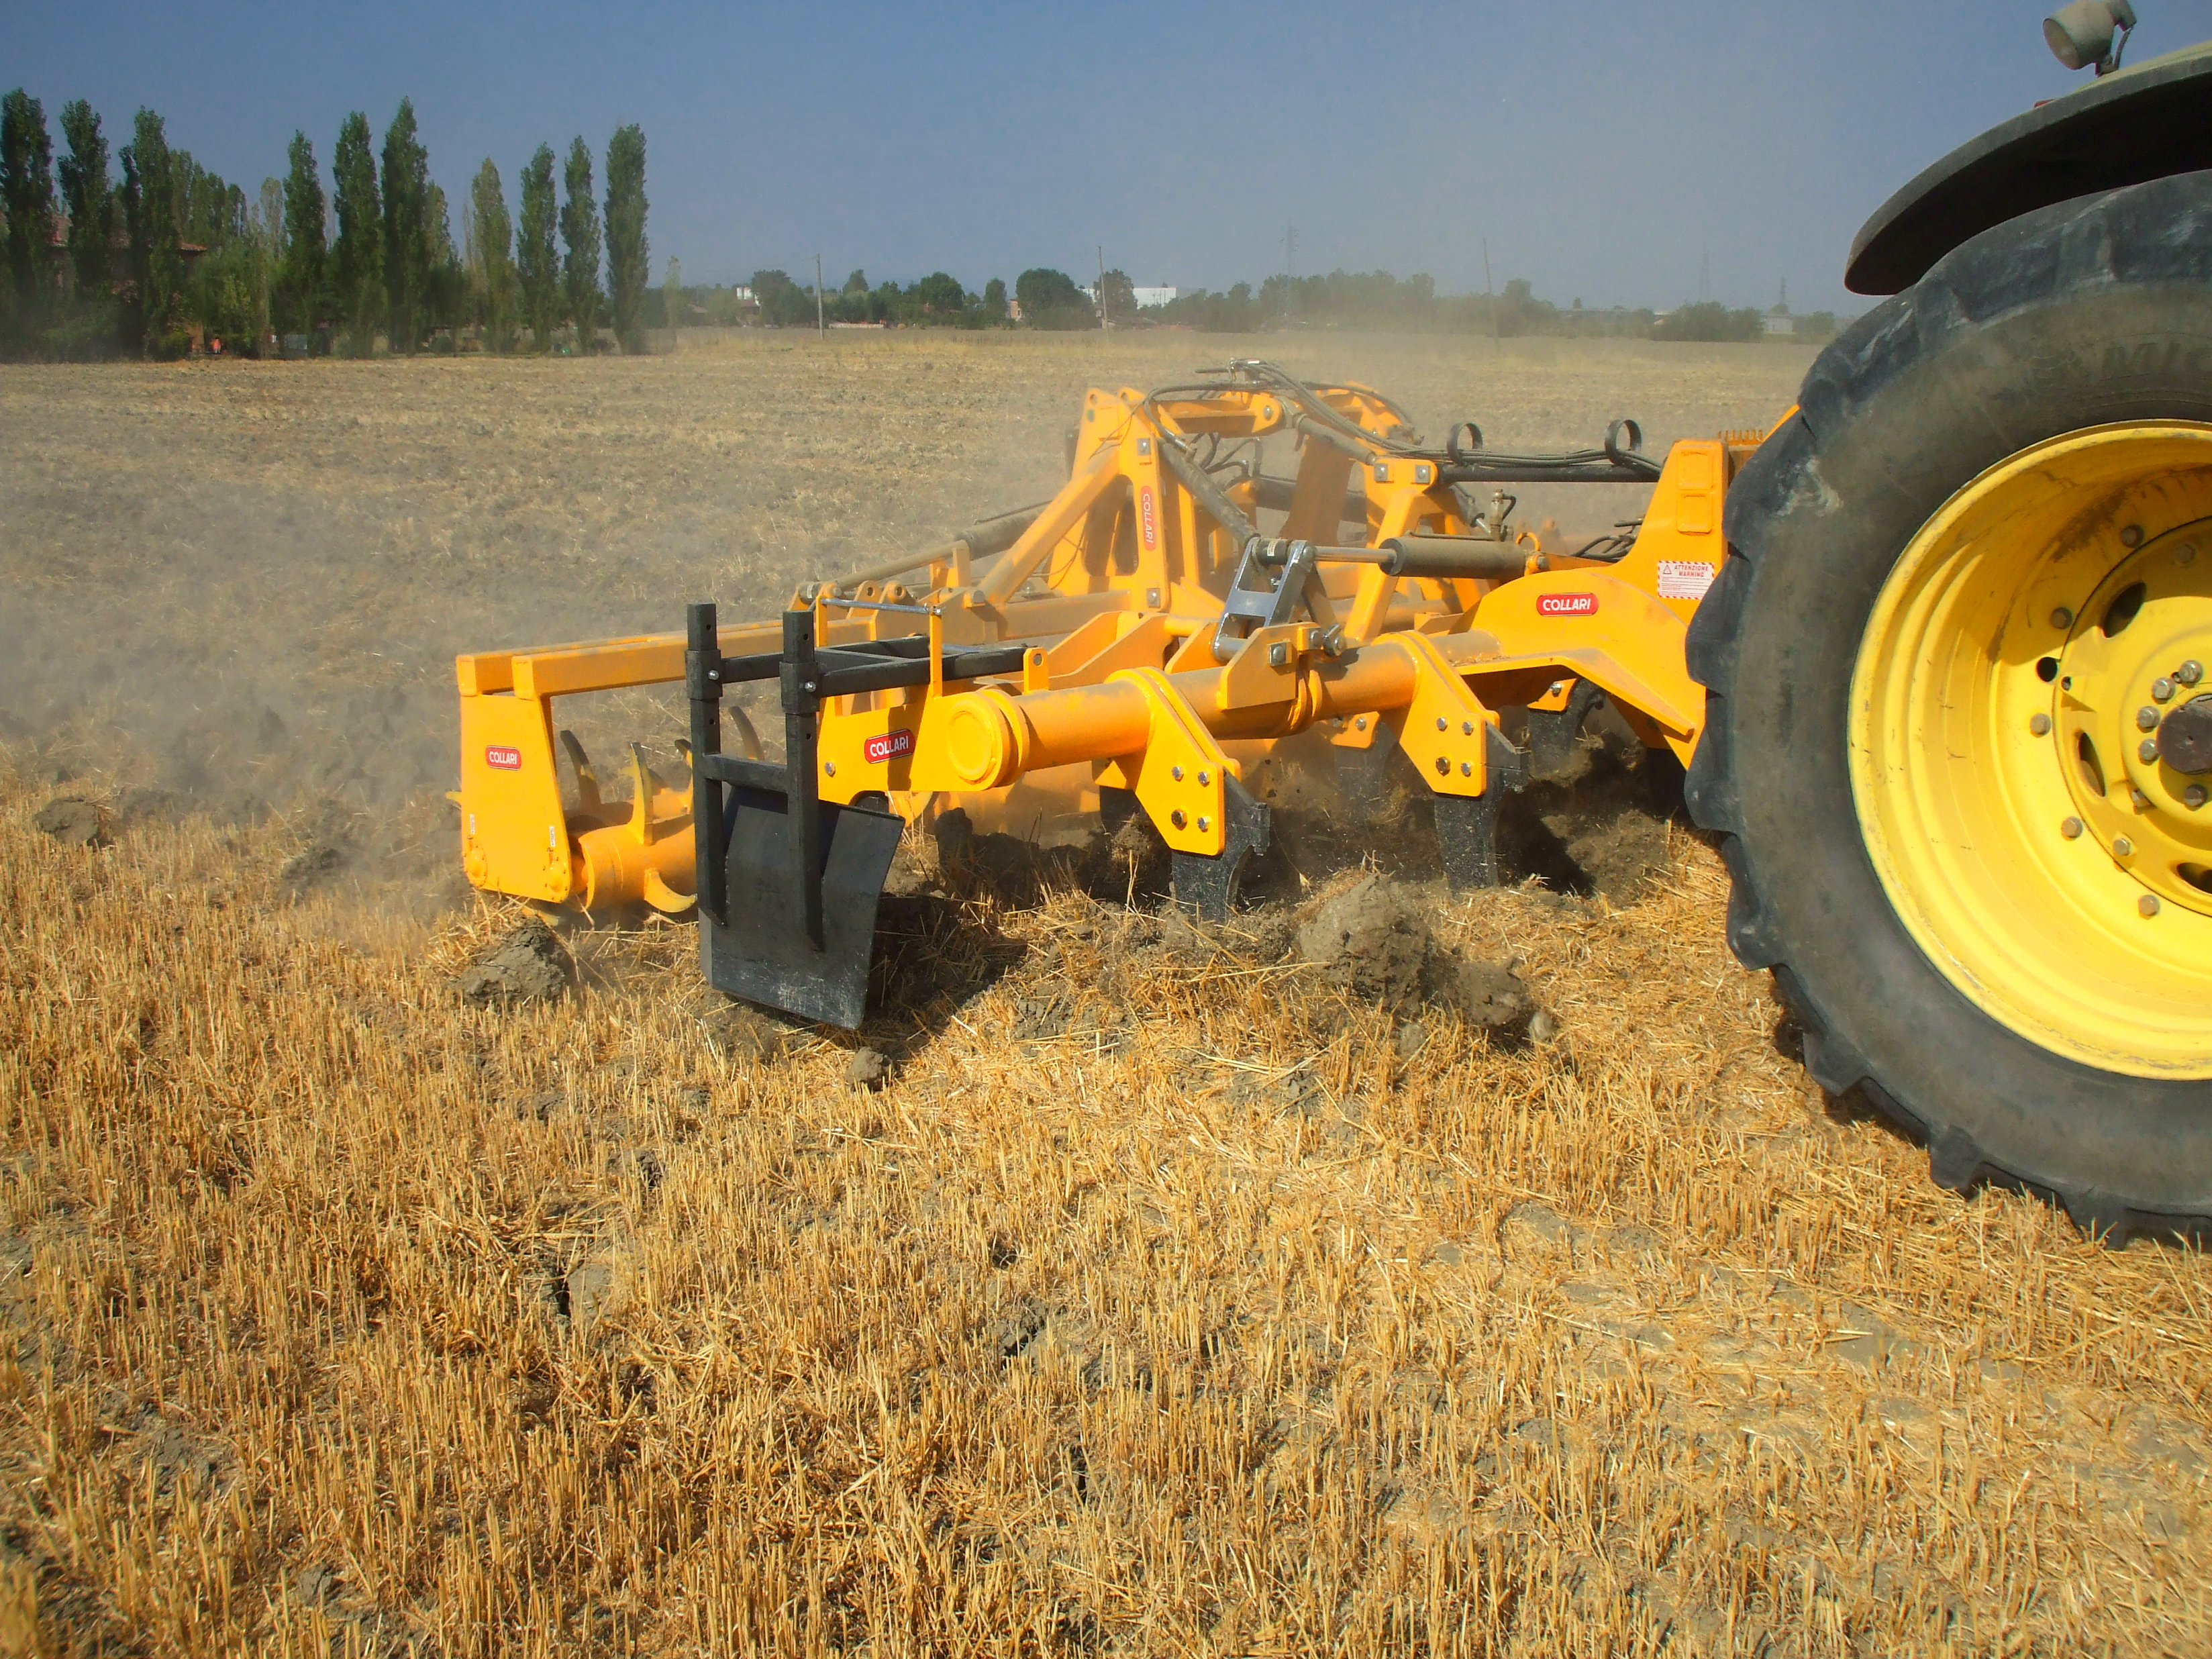 Collari EPRSC + ERSC Estirpatore + Sezione Posteriore a Rulli, Grubber + Rear Double roller section - Agricultural Machines & Coil Winders